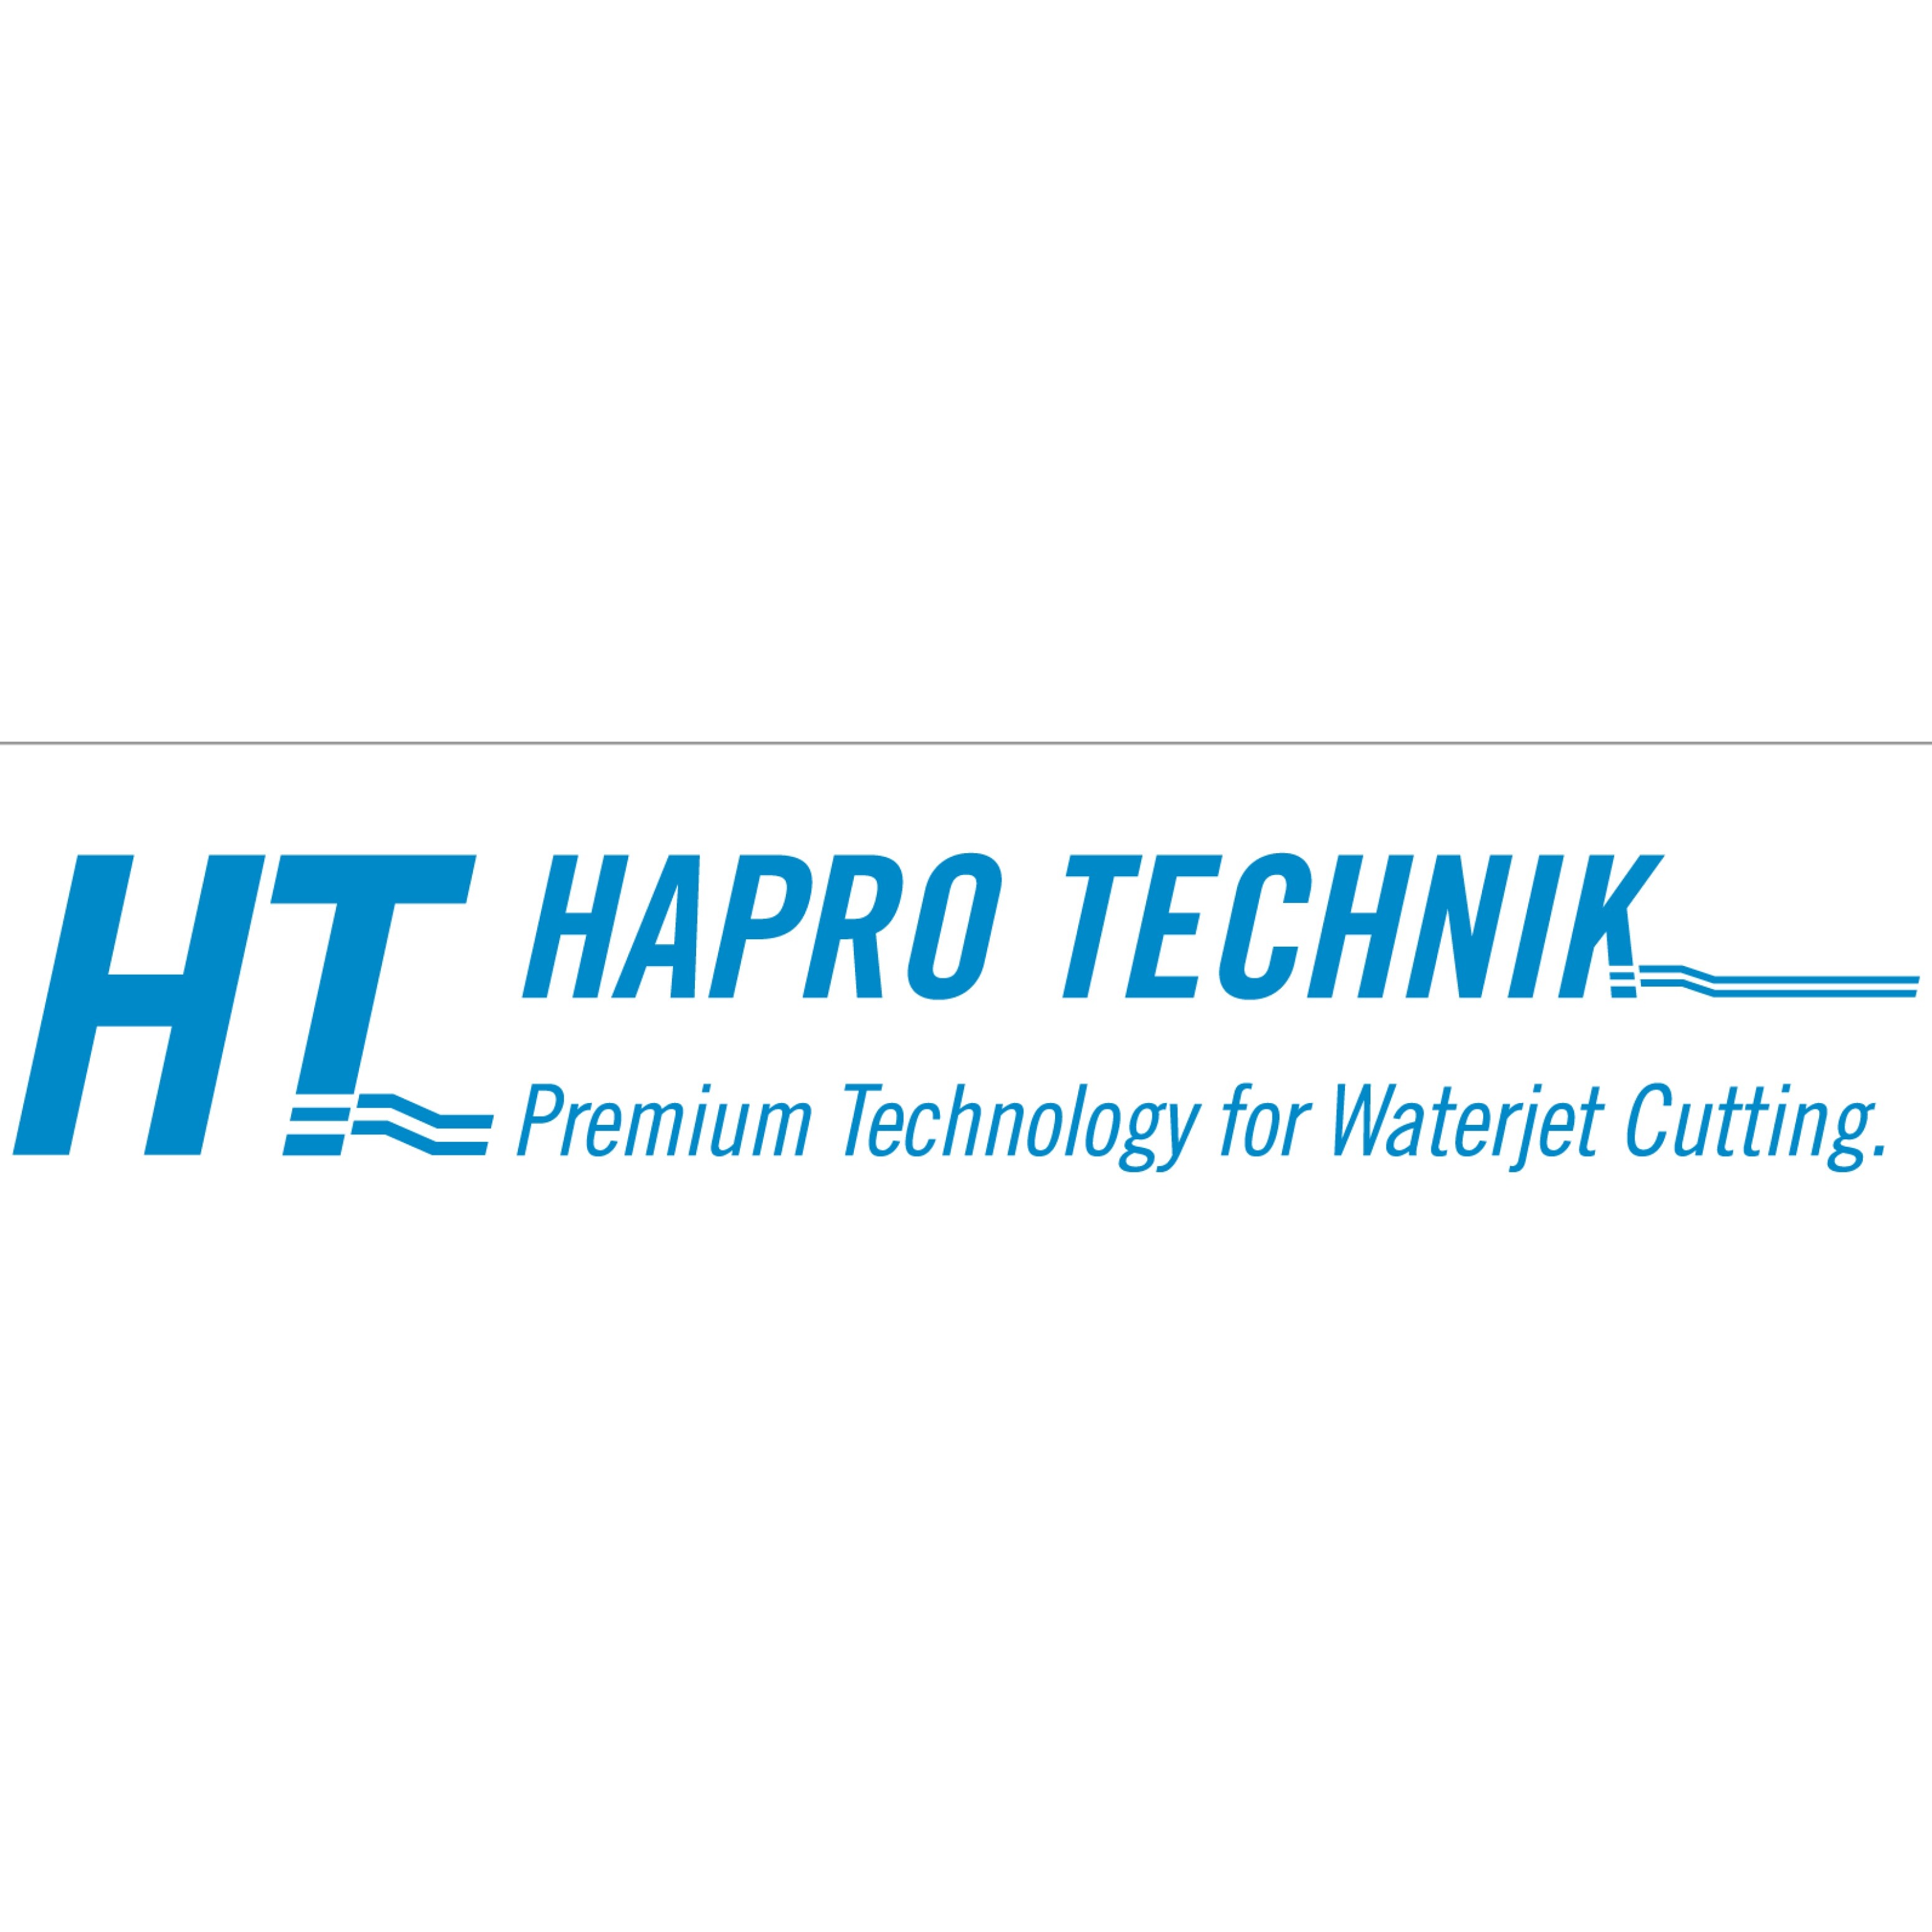 Hapro Technik Ges.m.b.H - Premium Technology for Waterjet Cutting Logo